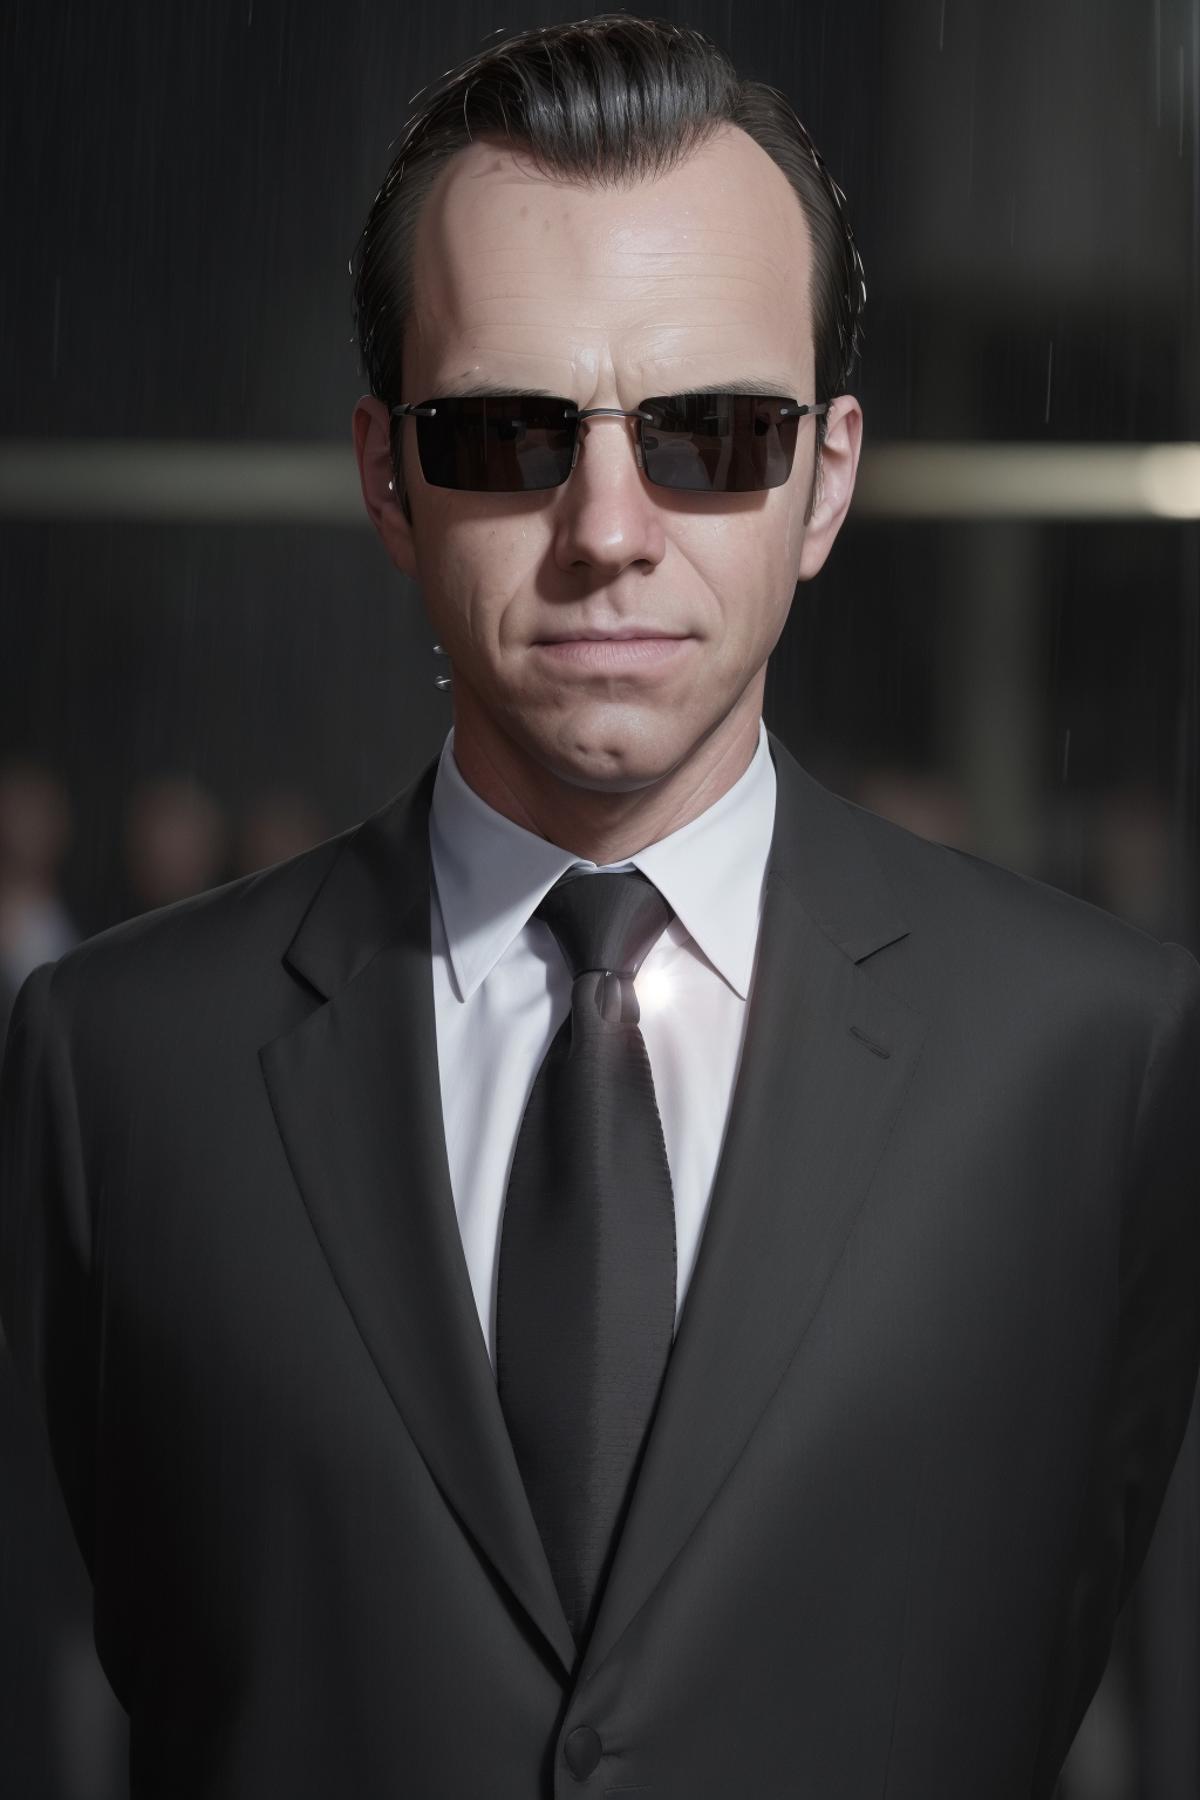 【KK_REAL】Agent Smith 史密斯探員 The Matrix image by Kisaku_KK77